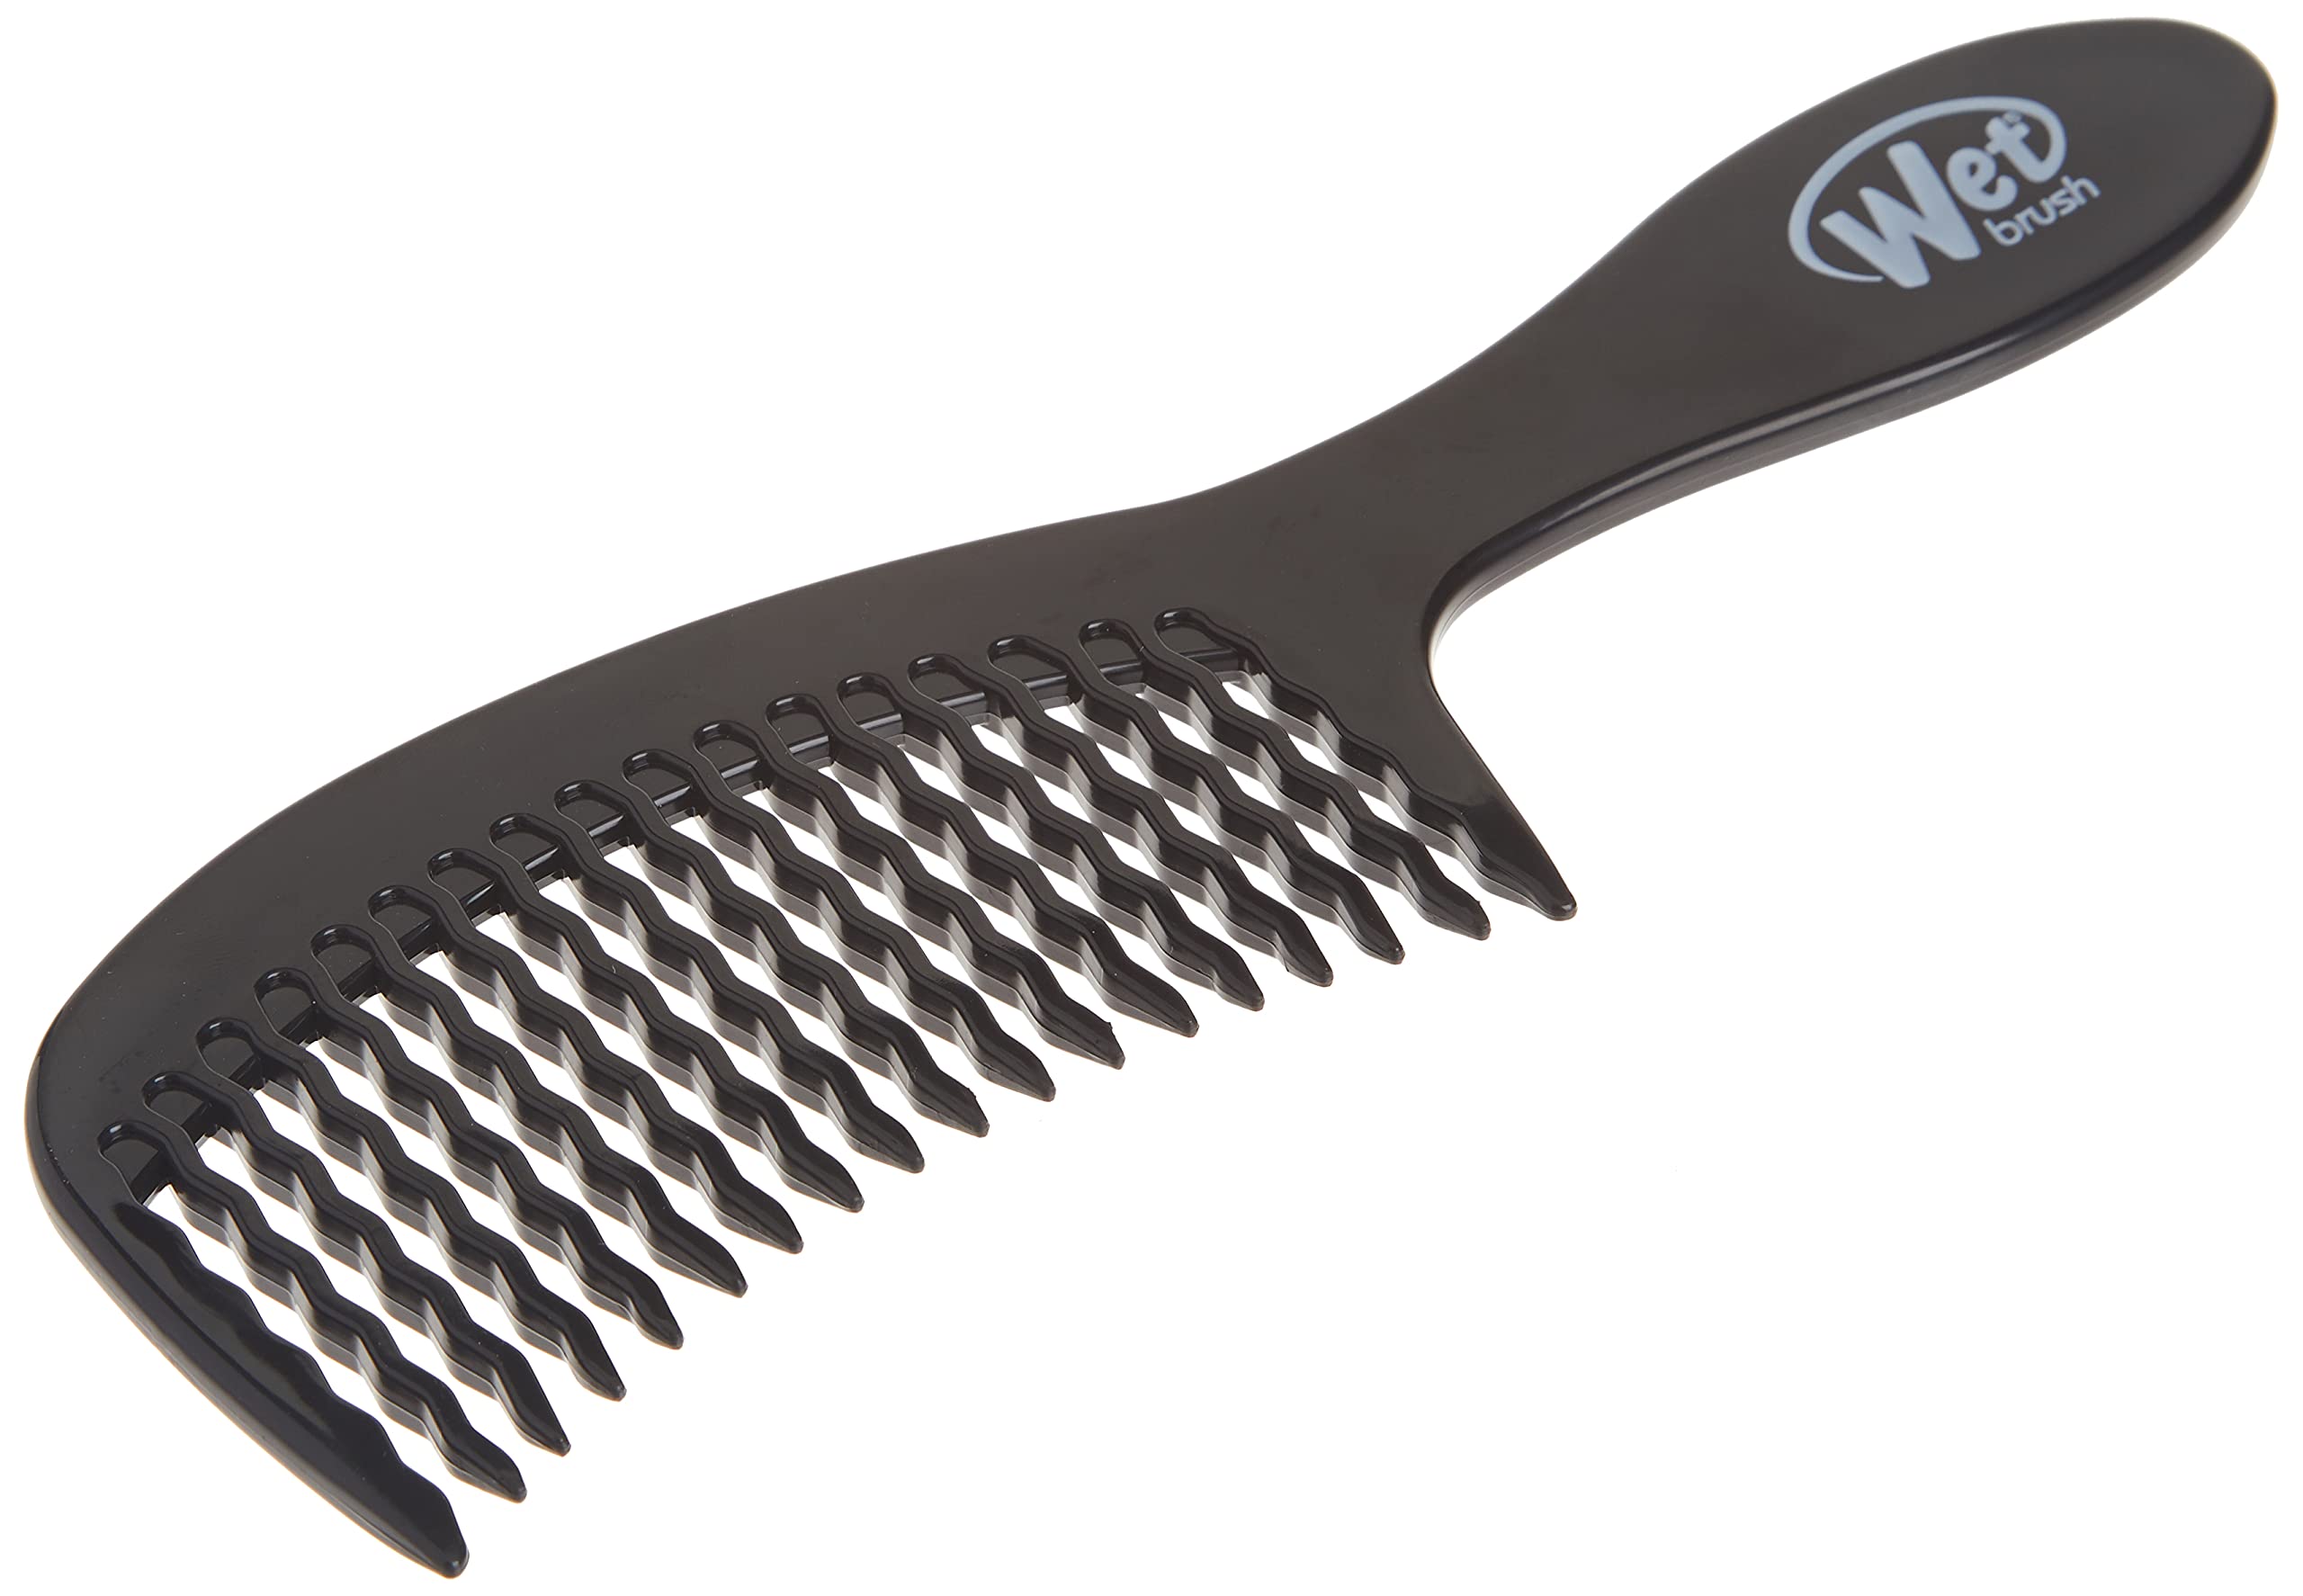 Wet Brush Detangling Comb - Black Unisex Comb 1 Count(Pack of 1)